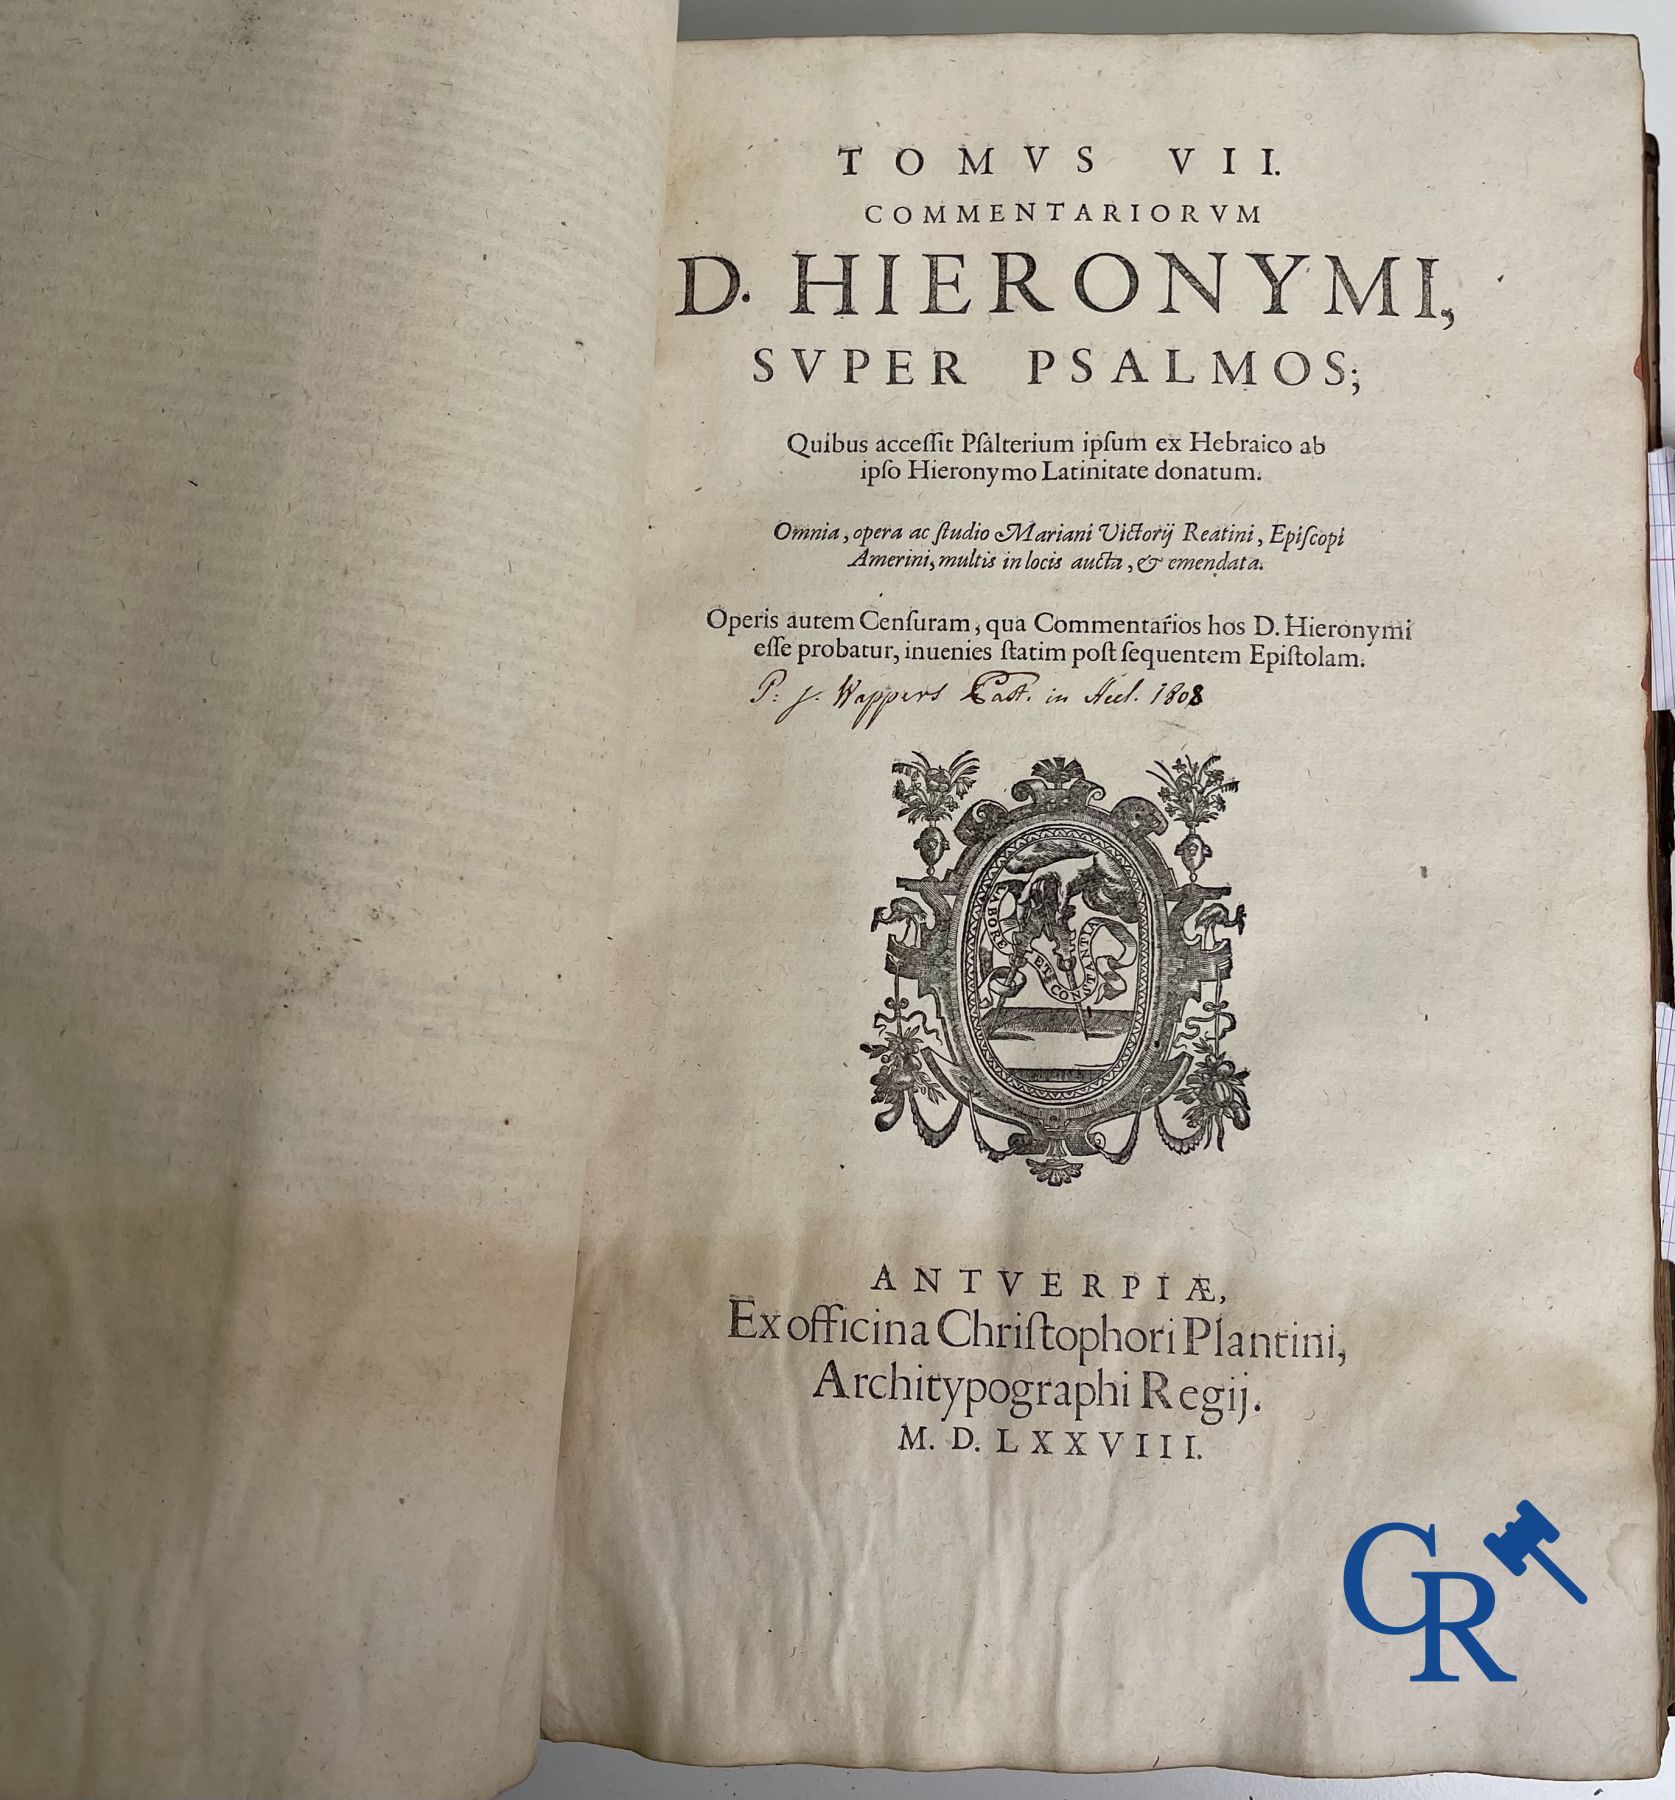 Early printed books: Les oeuvres de Saint Jerome, Mariani Victorij Reatini. Atelier Plantijn (1578-1 - Image 21 of 26